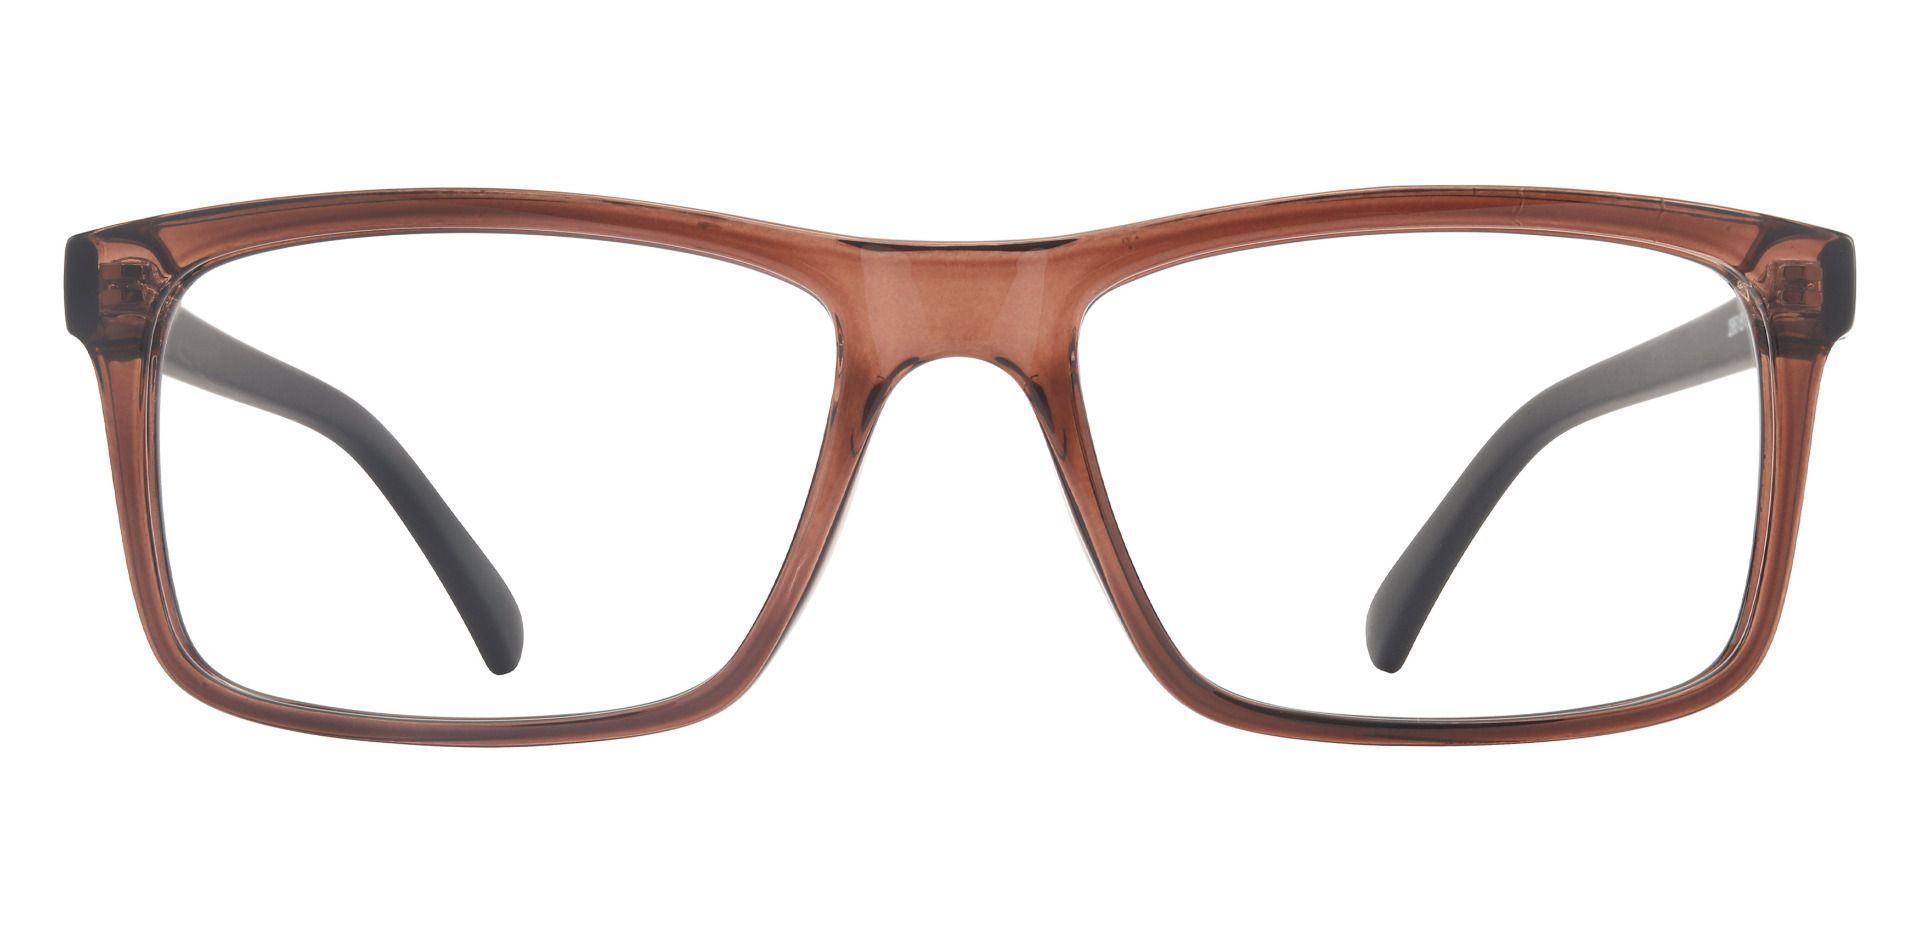 Matthew Rectangle Prescription Glasses - Brown